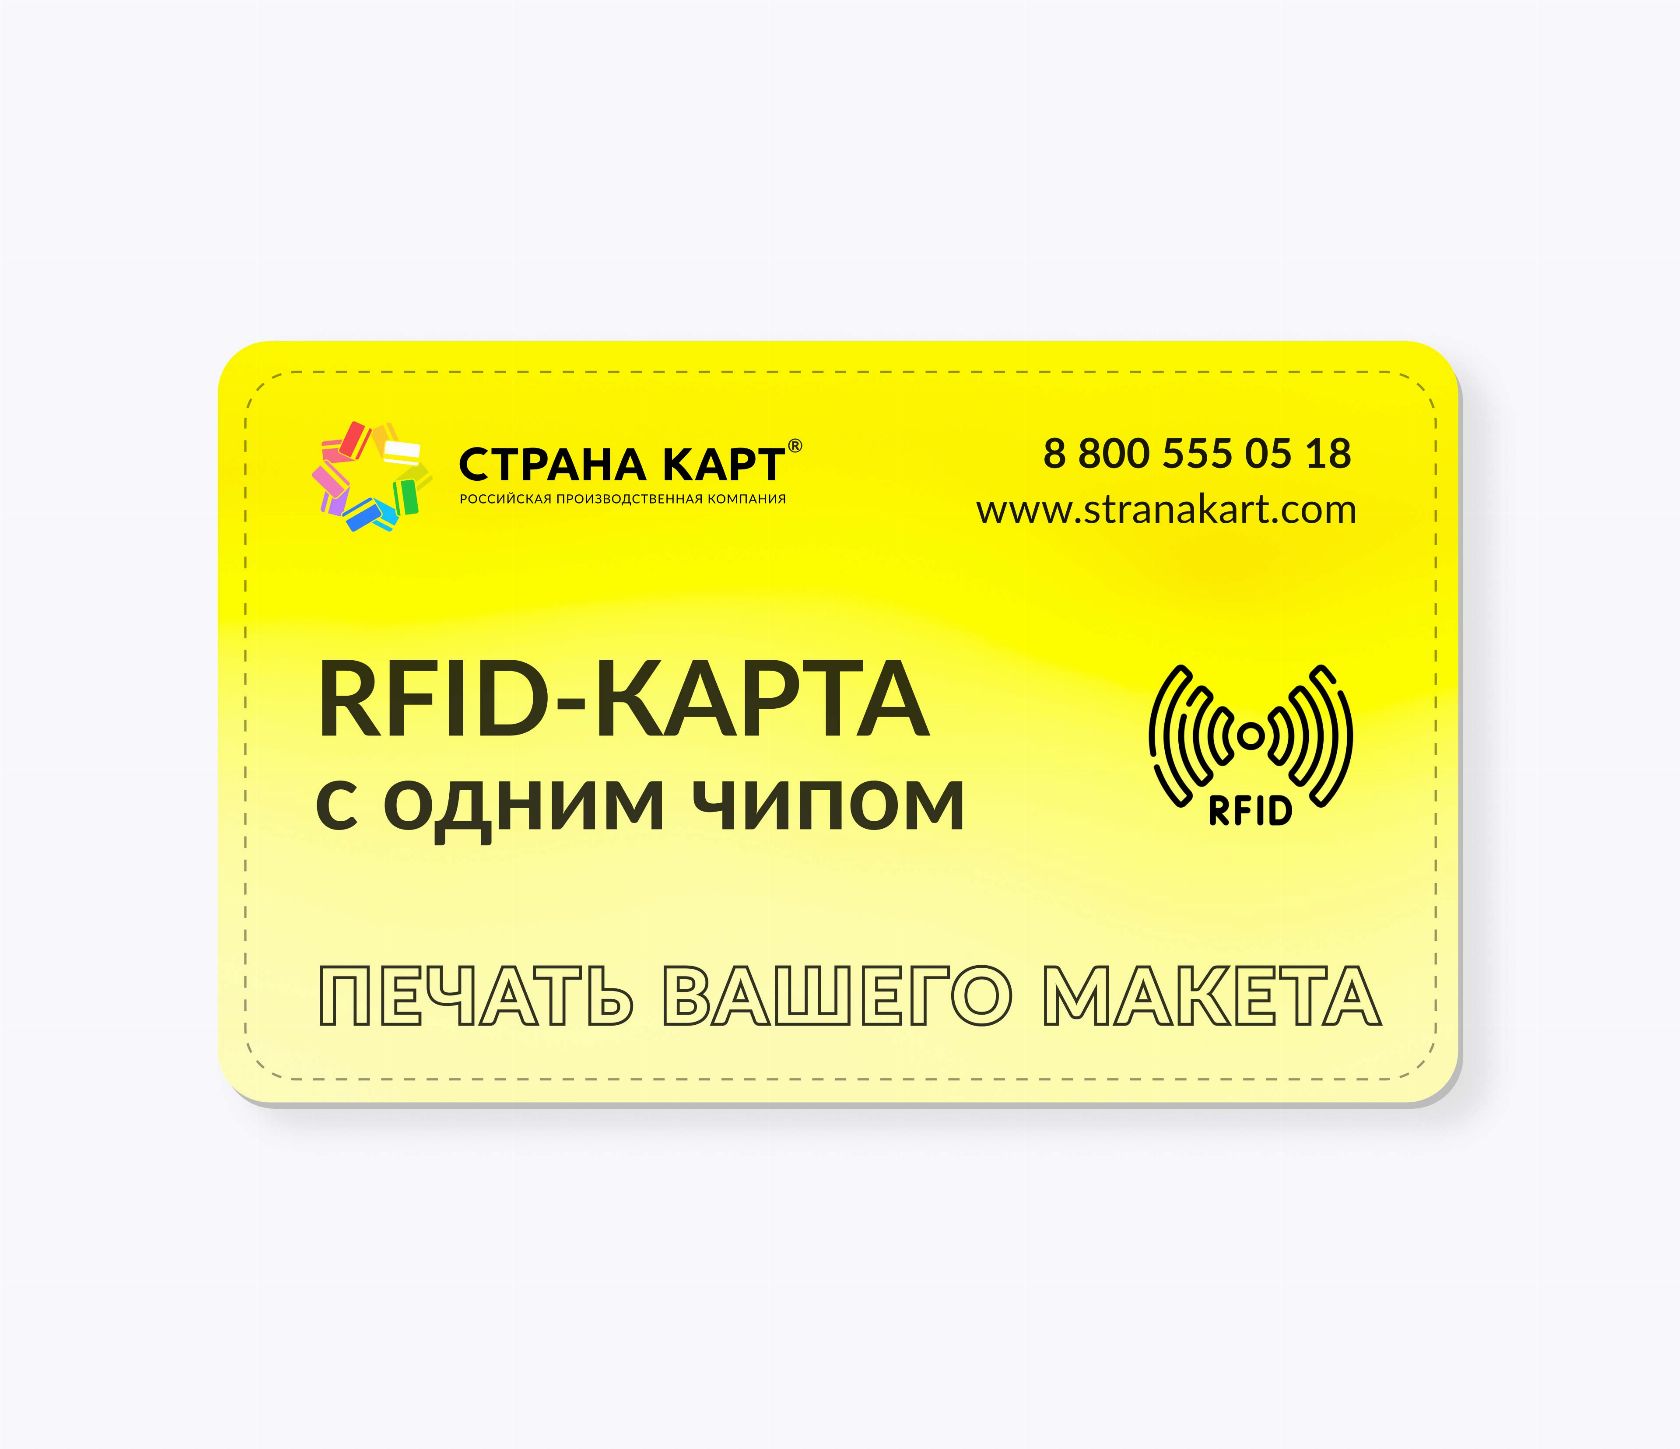 RFID-карты с чипом NXP MIFARE Classic 1k 7 byte UID печать вашего макета RFID-карты с чипом NXP MIFARE Classic 1k 7 byte UID